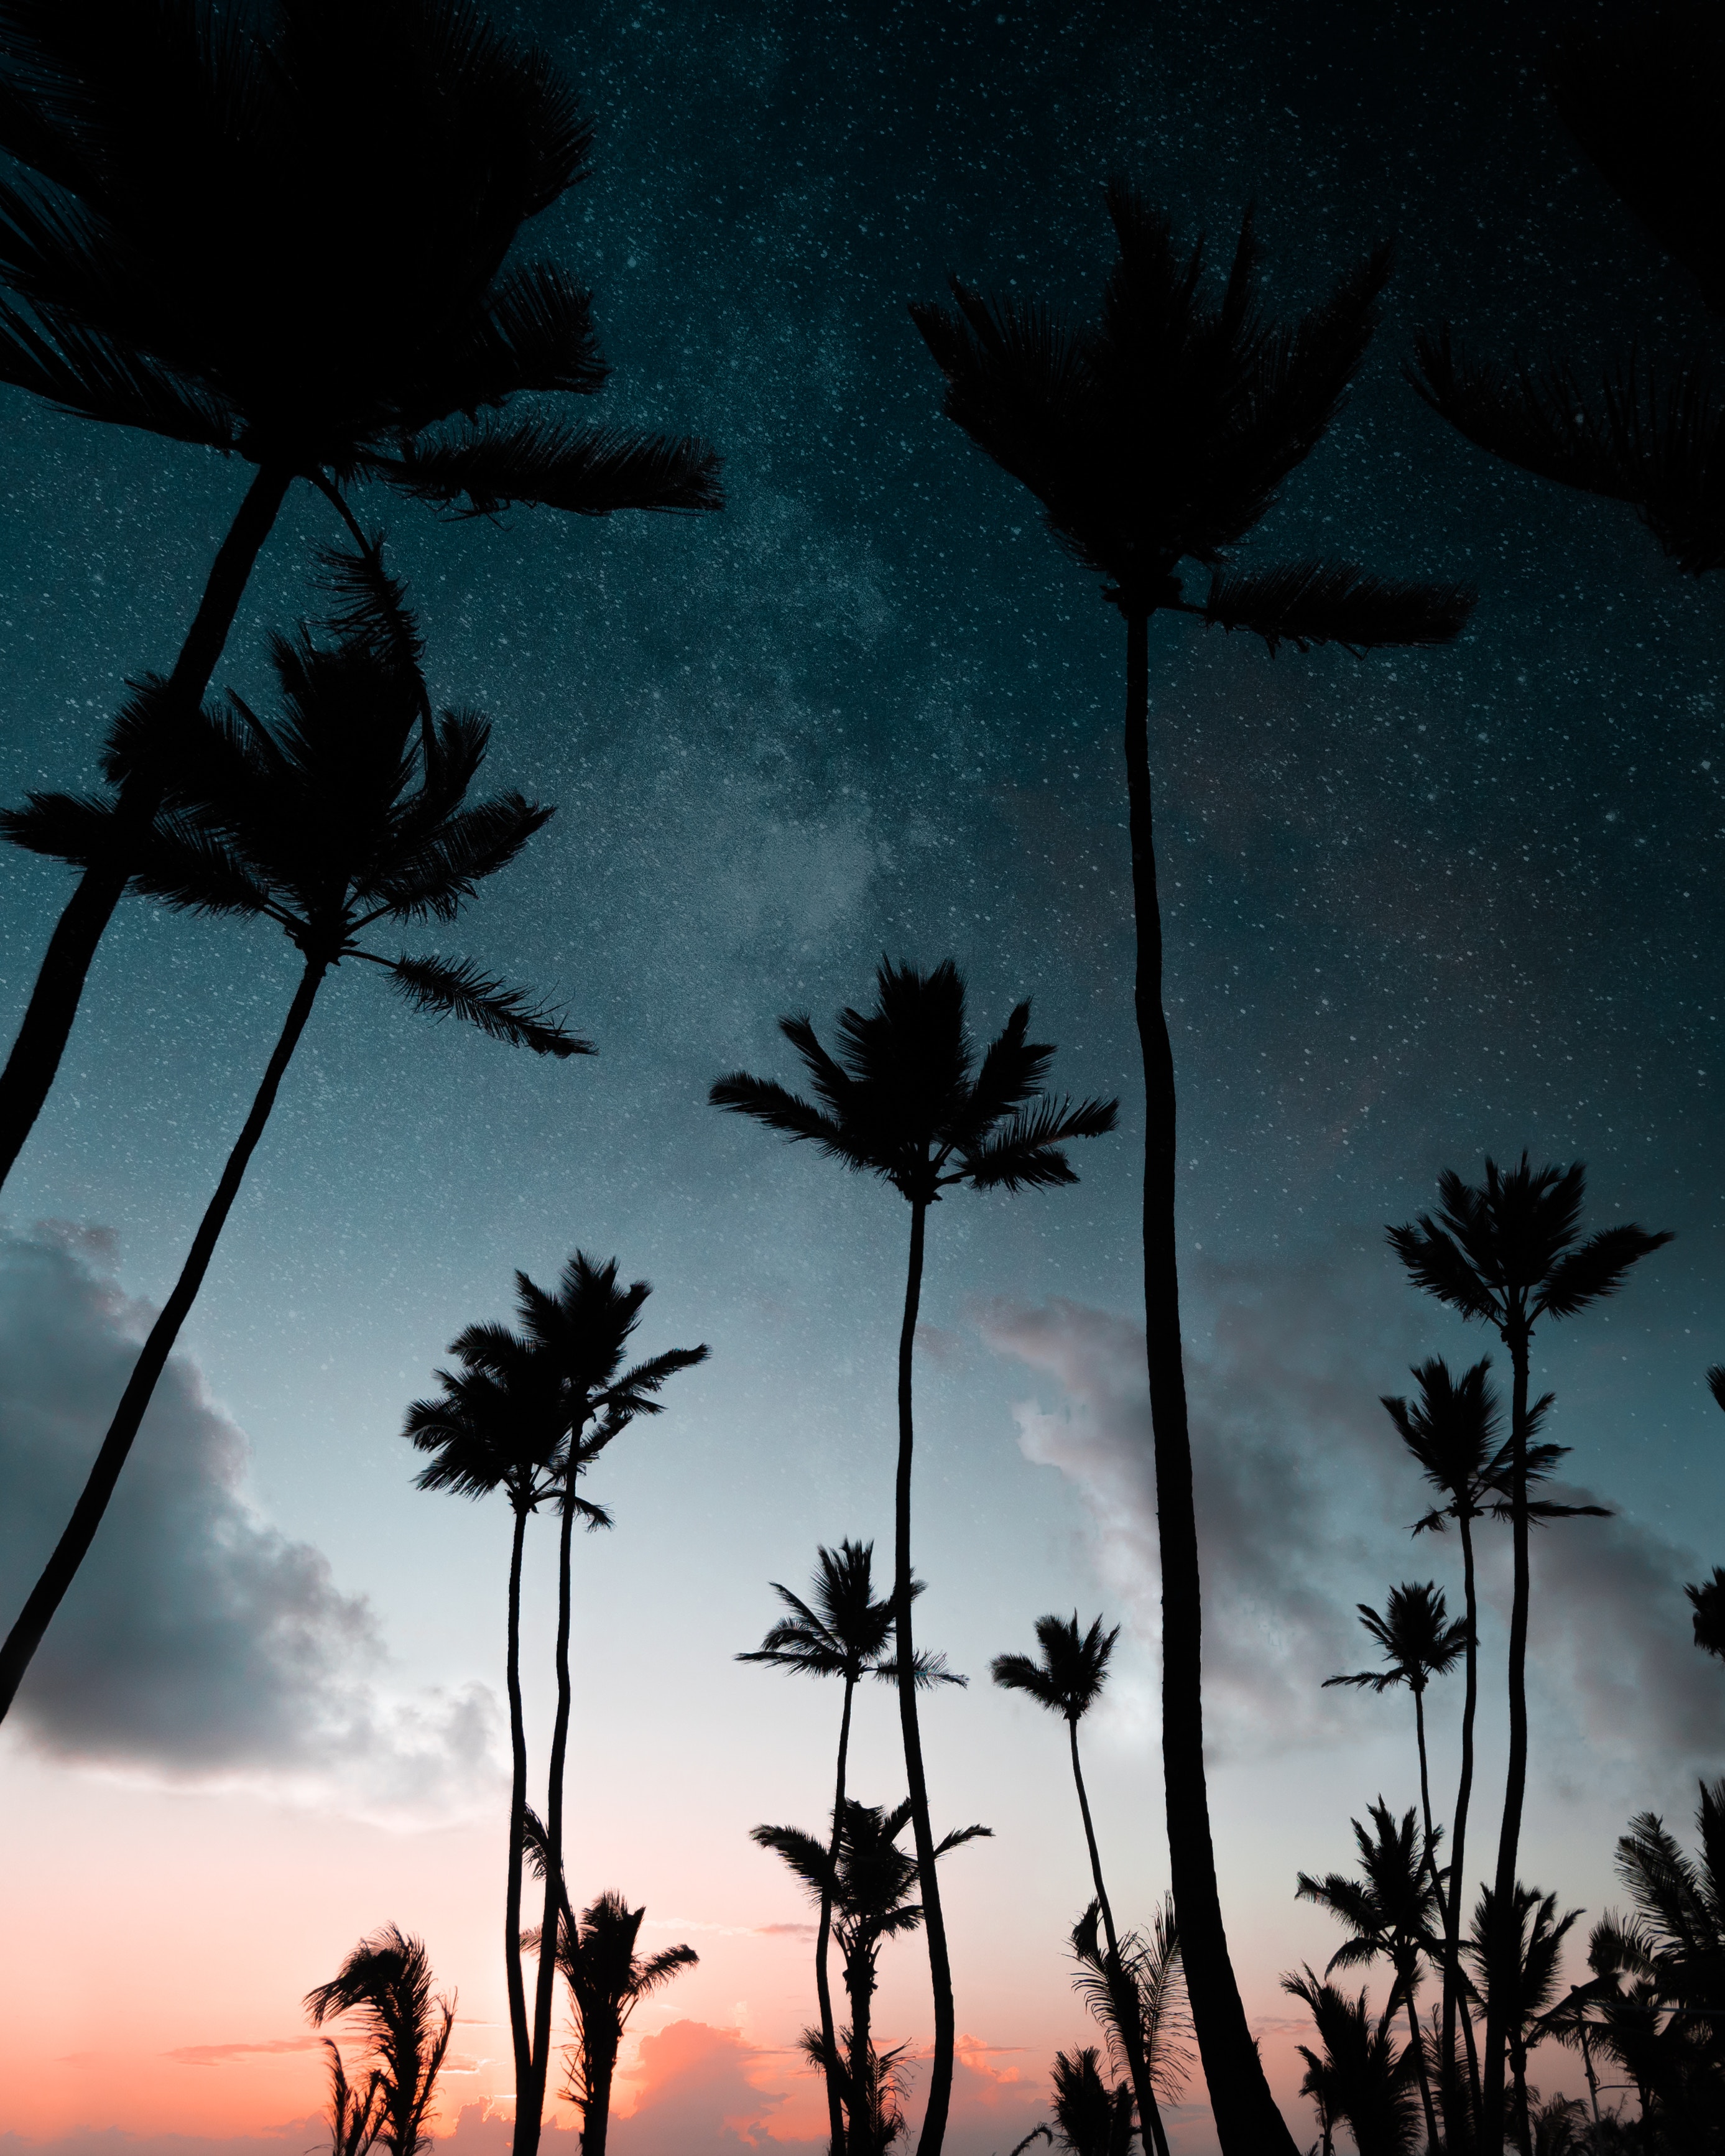 97578 descargar imagen naturaleza, noche, palms, oscuro, siluetas, cielo estrellado: fondos de pantalla y protectores de pantalla gratis